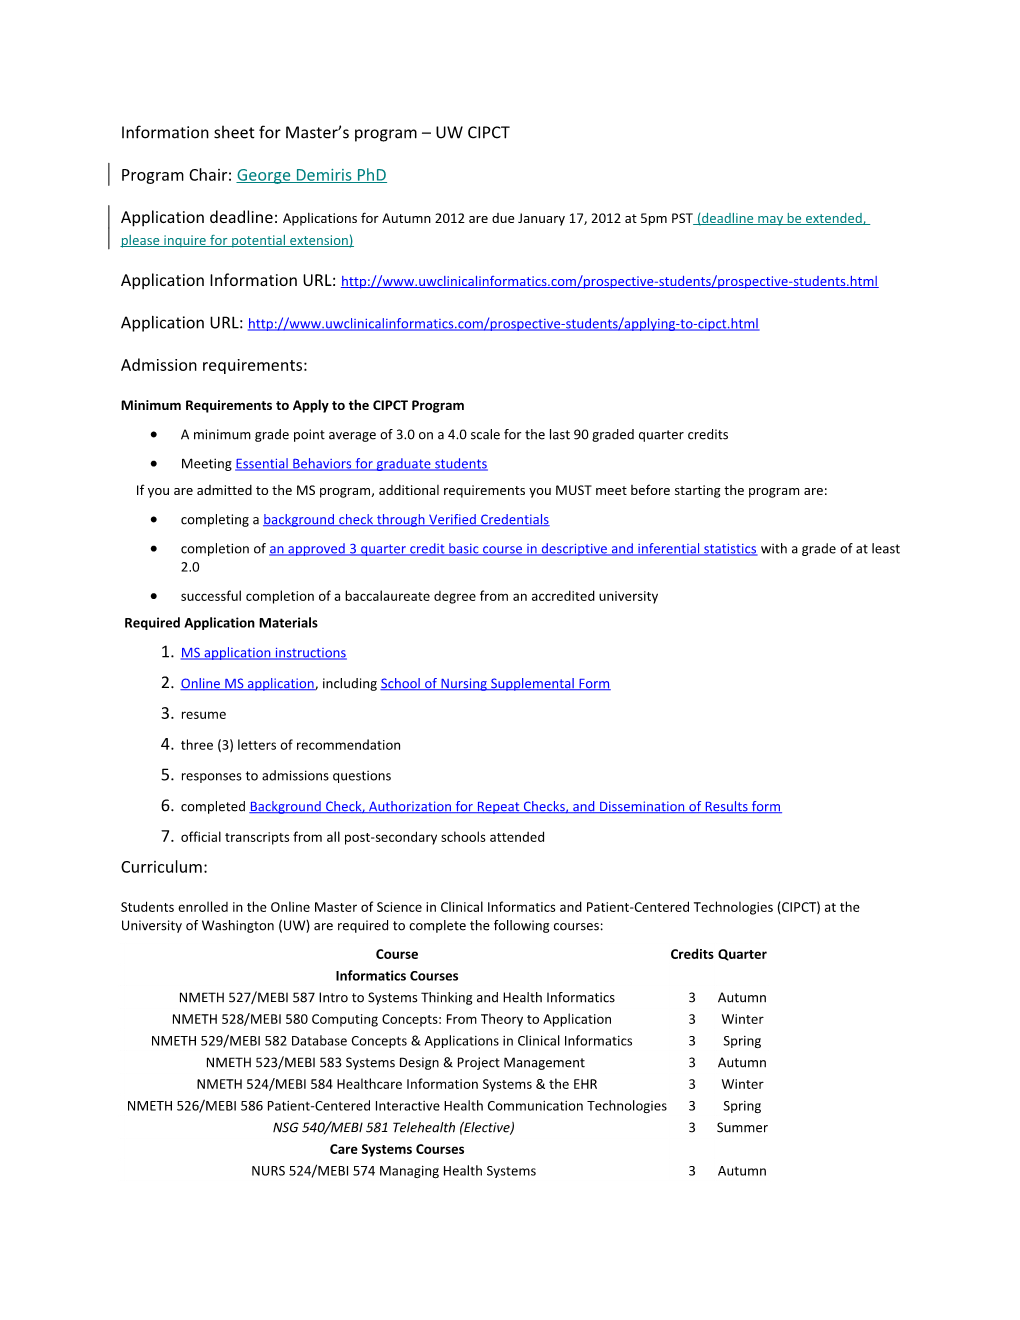 Information Sheet for Master S Program UW CIPCT